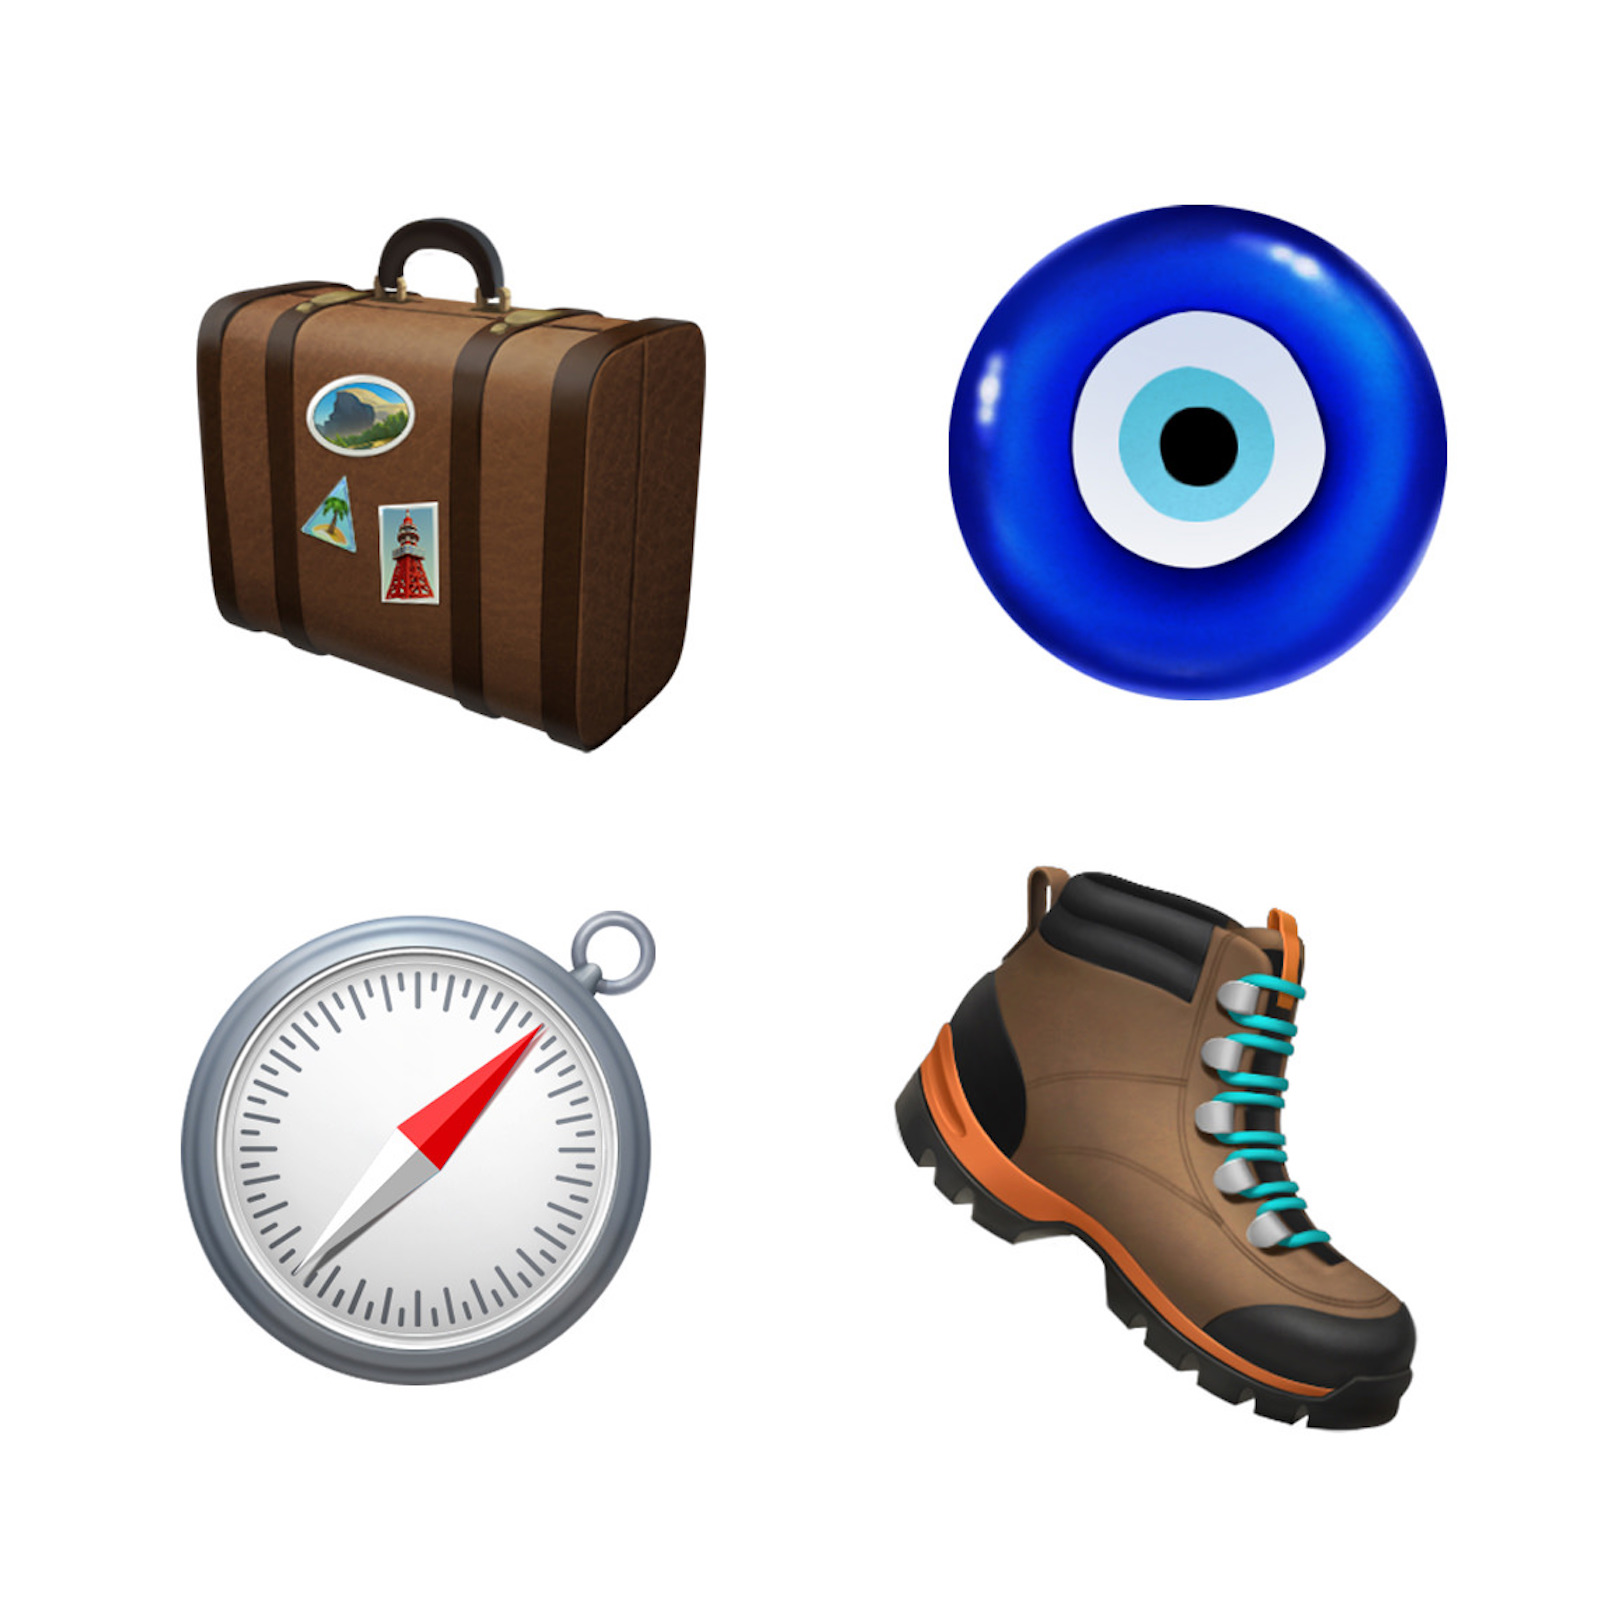 ios-121-emoji-update-luggage-boots-compass-10012018.jpg